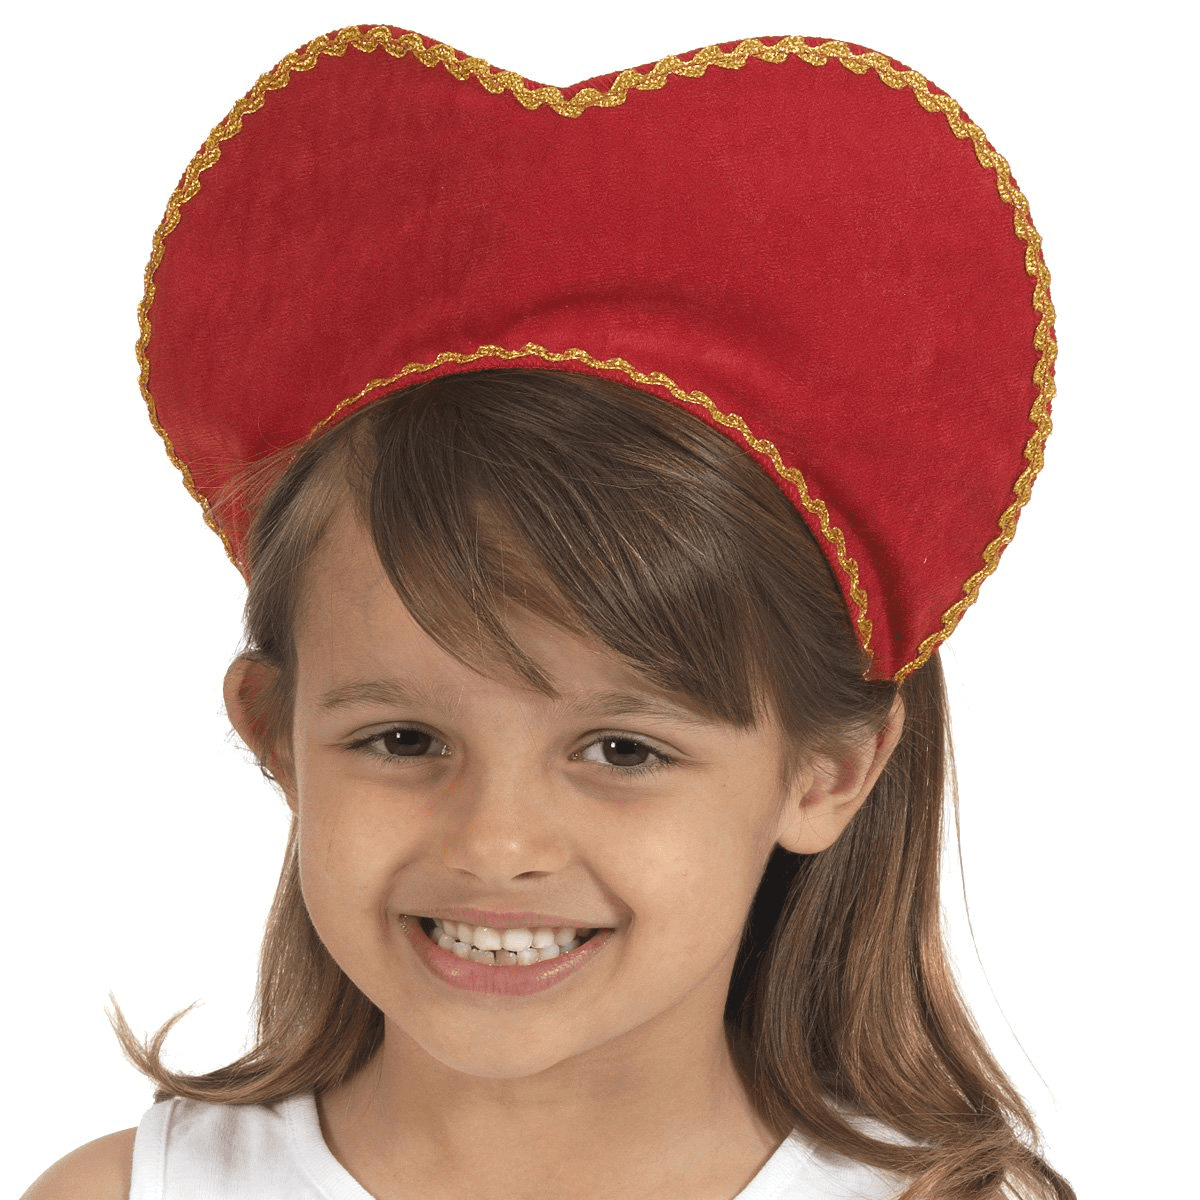 Girls Red Coronet For Tudor Queen Costume